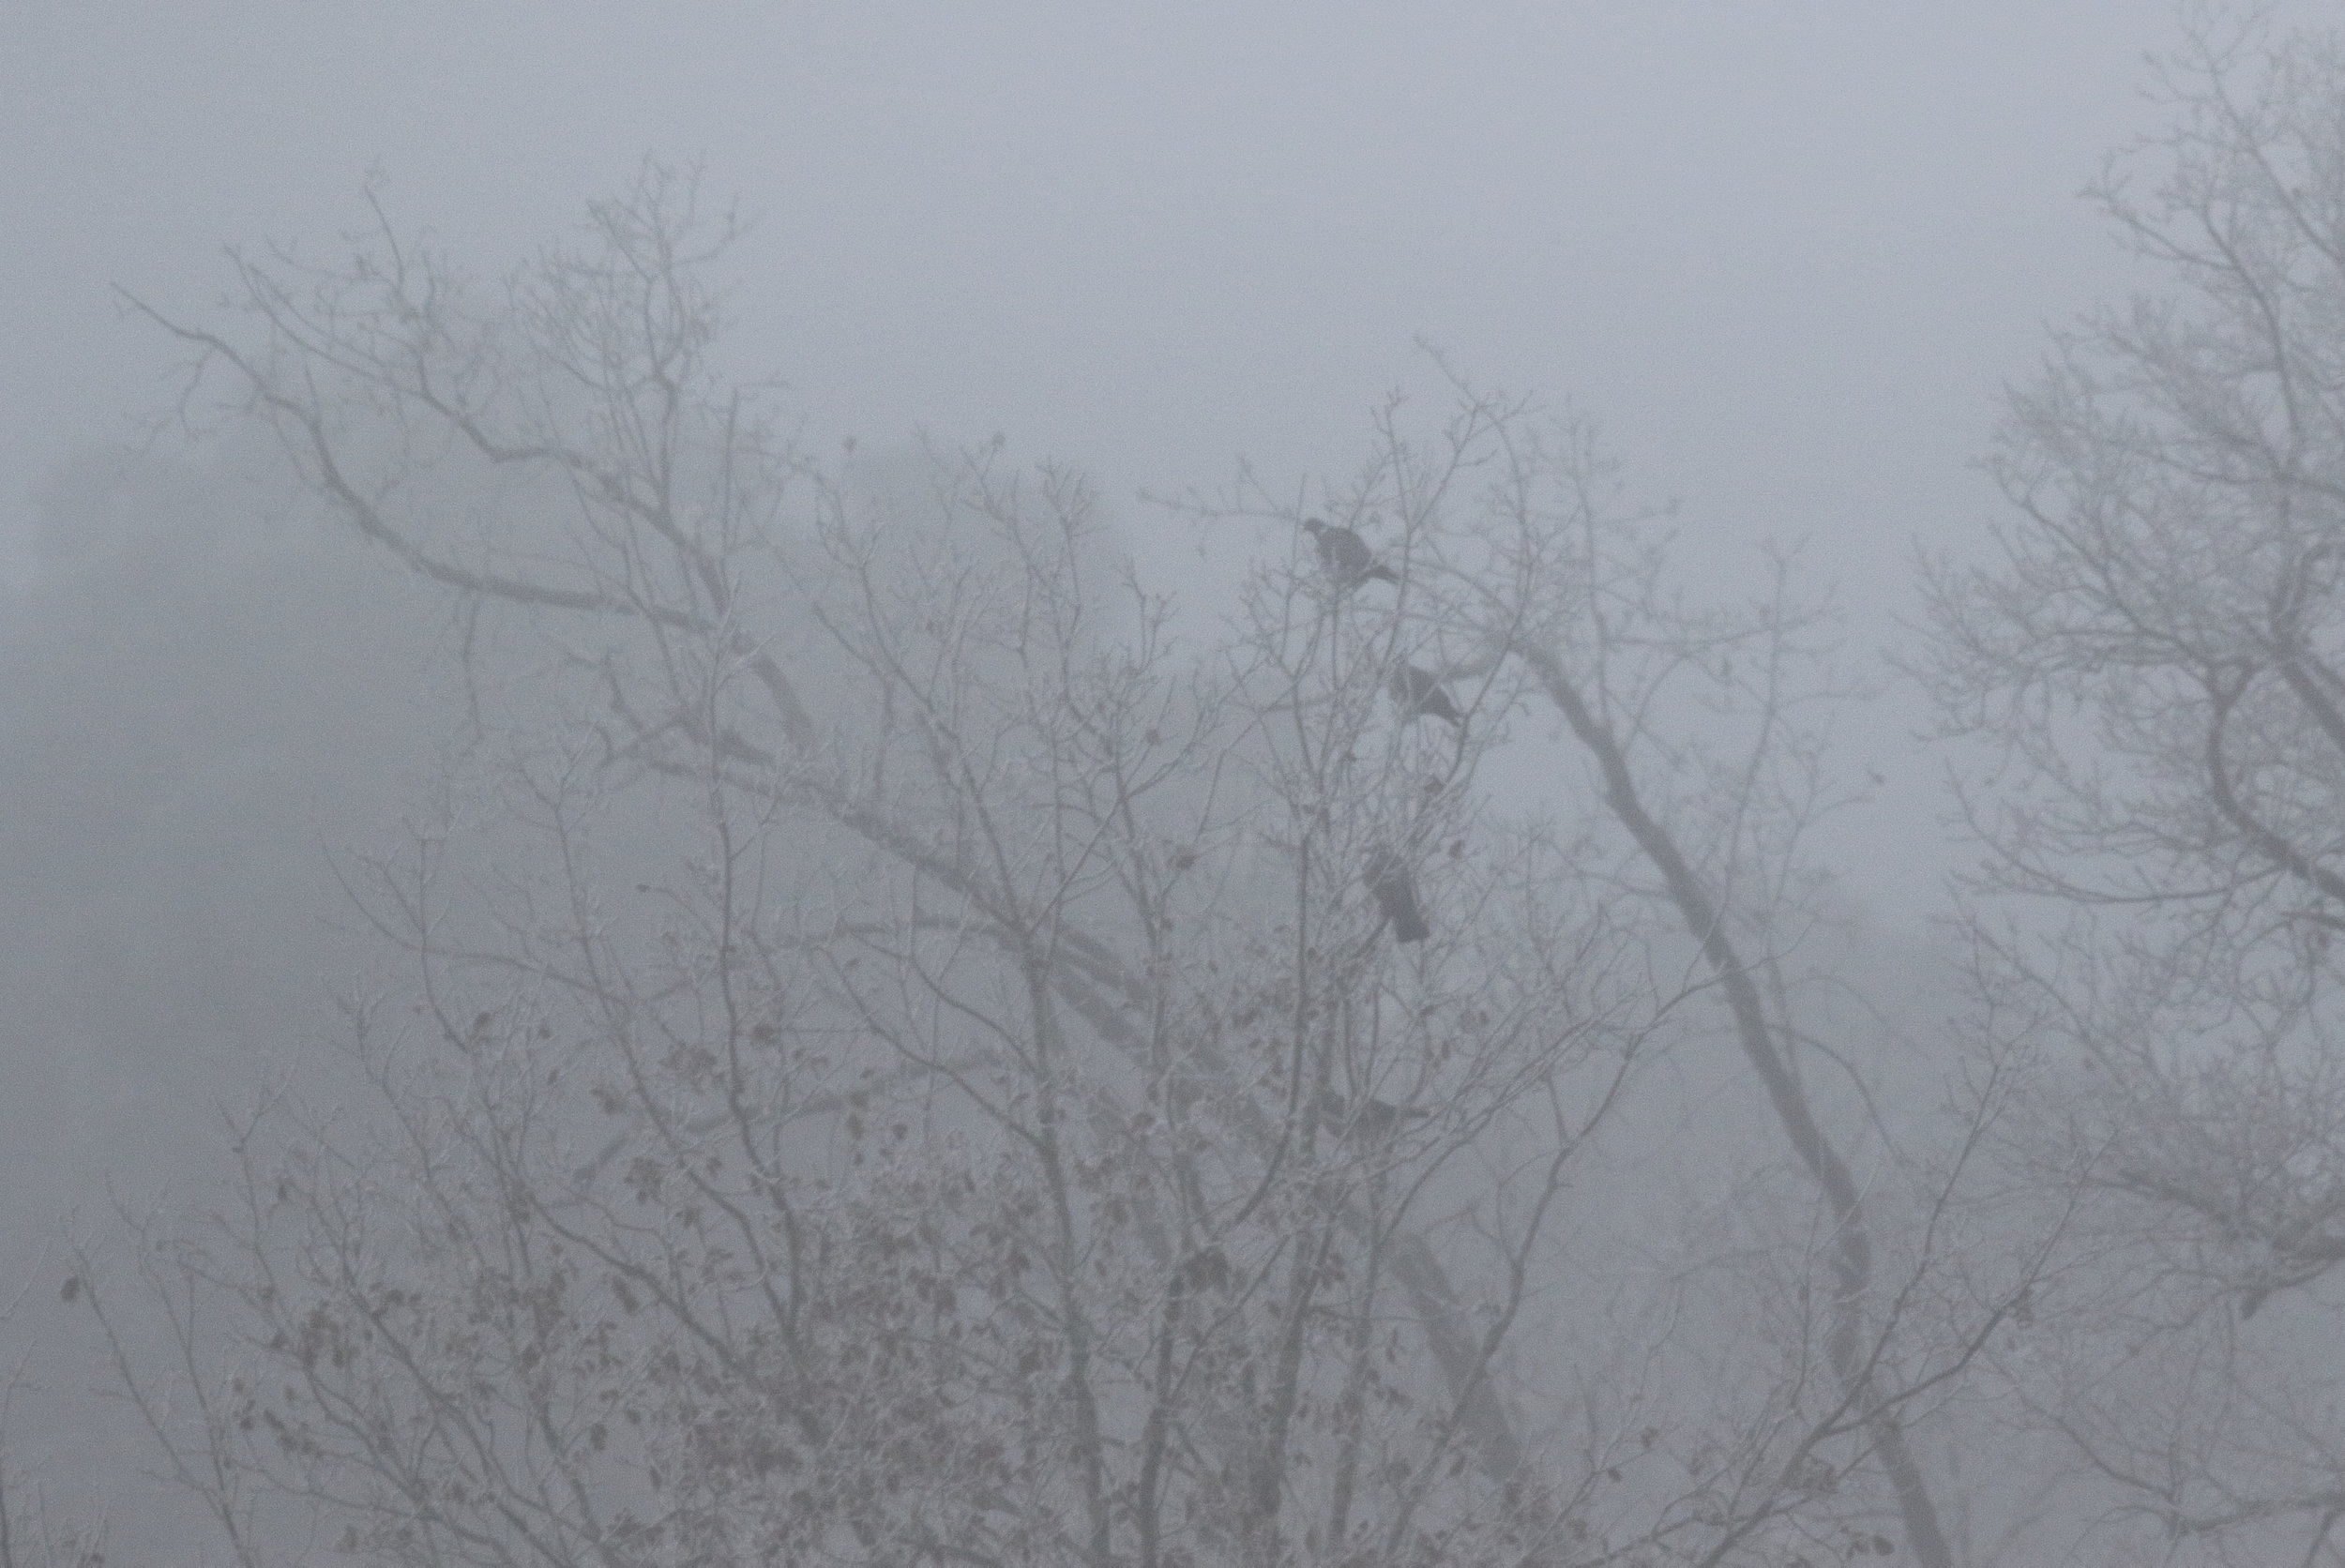 Palombes dans la brume